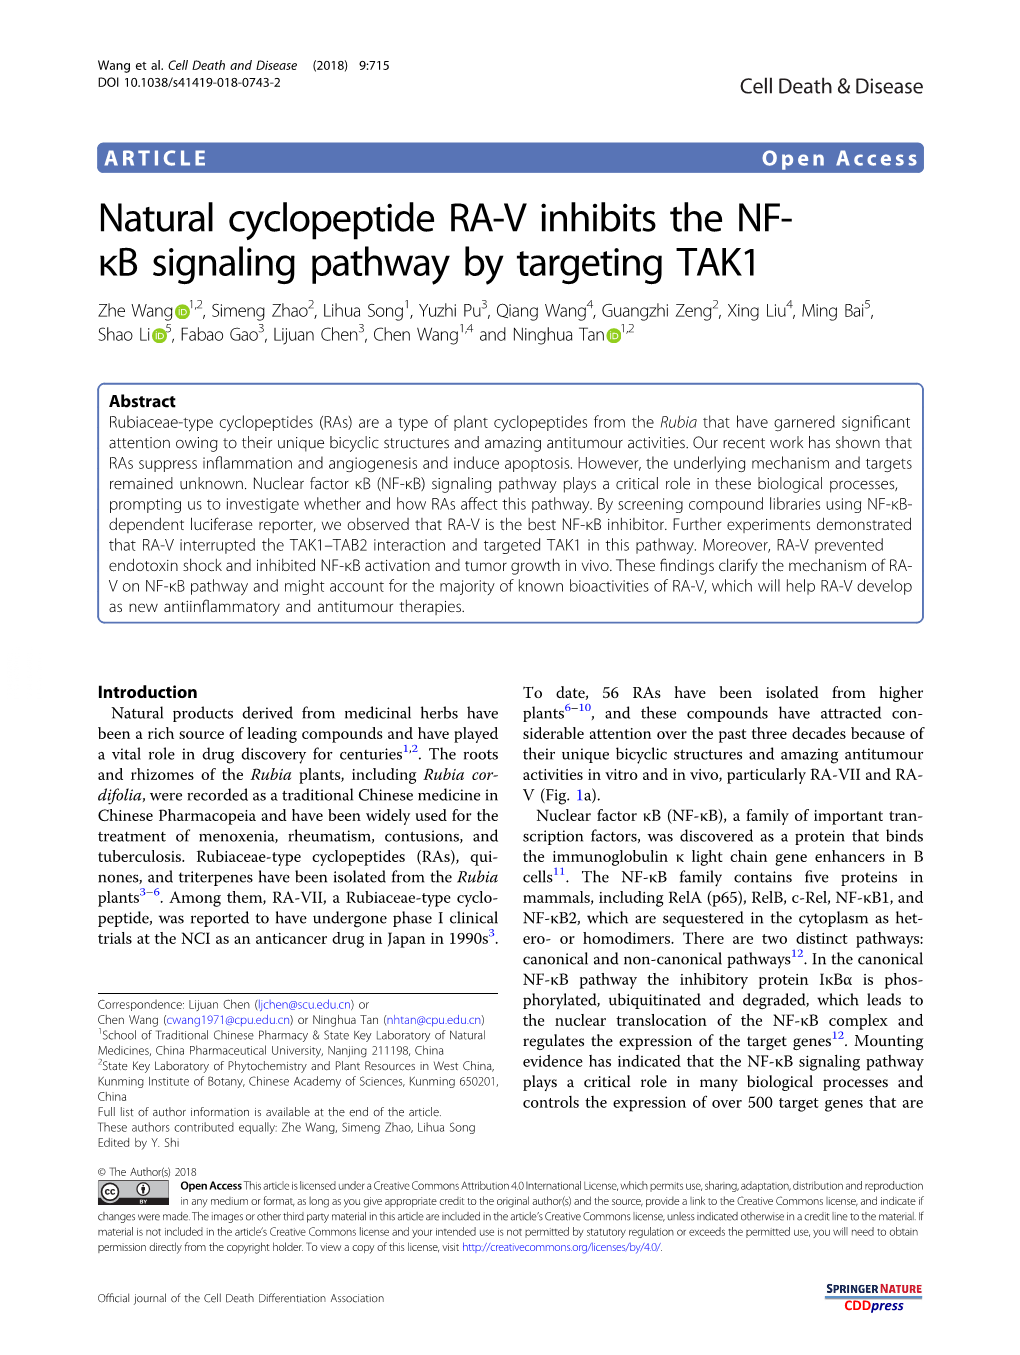 Natural Cyclopeptide RA-V Inhibits the NF-ÎºB Signaling Pathway By